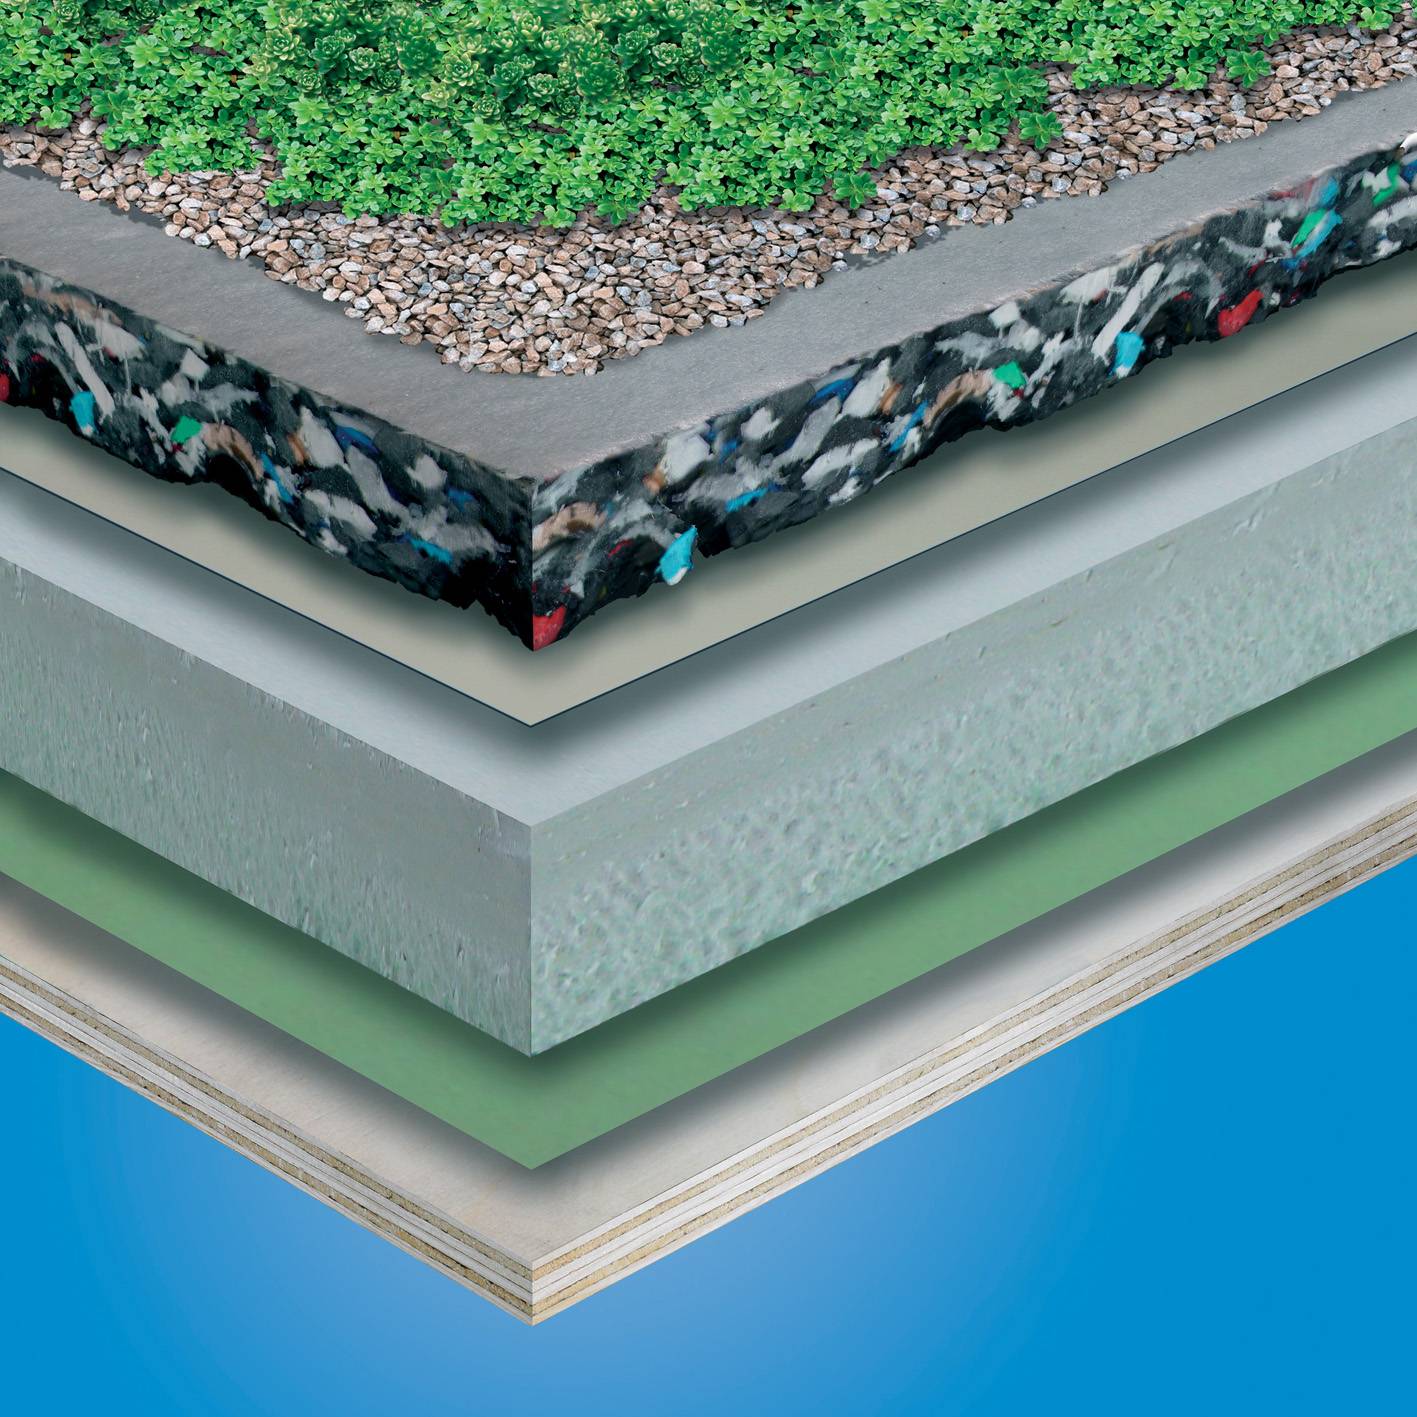 TG66 Green Roof System - Cuspated PUR Foam Drainage Board